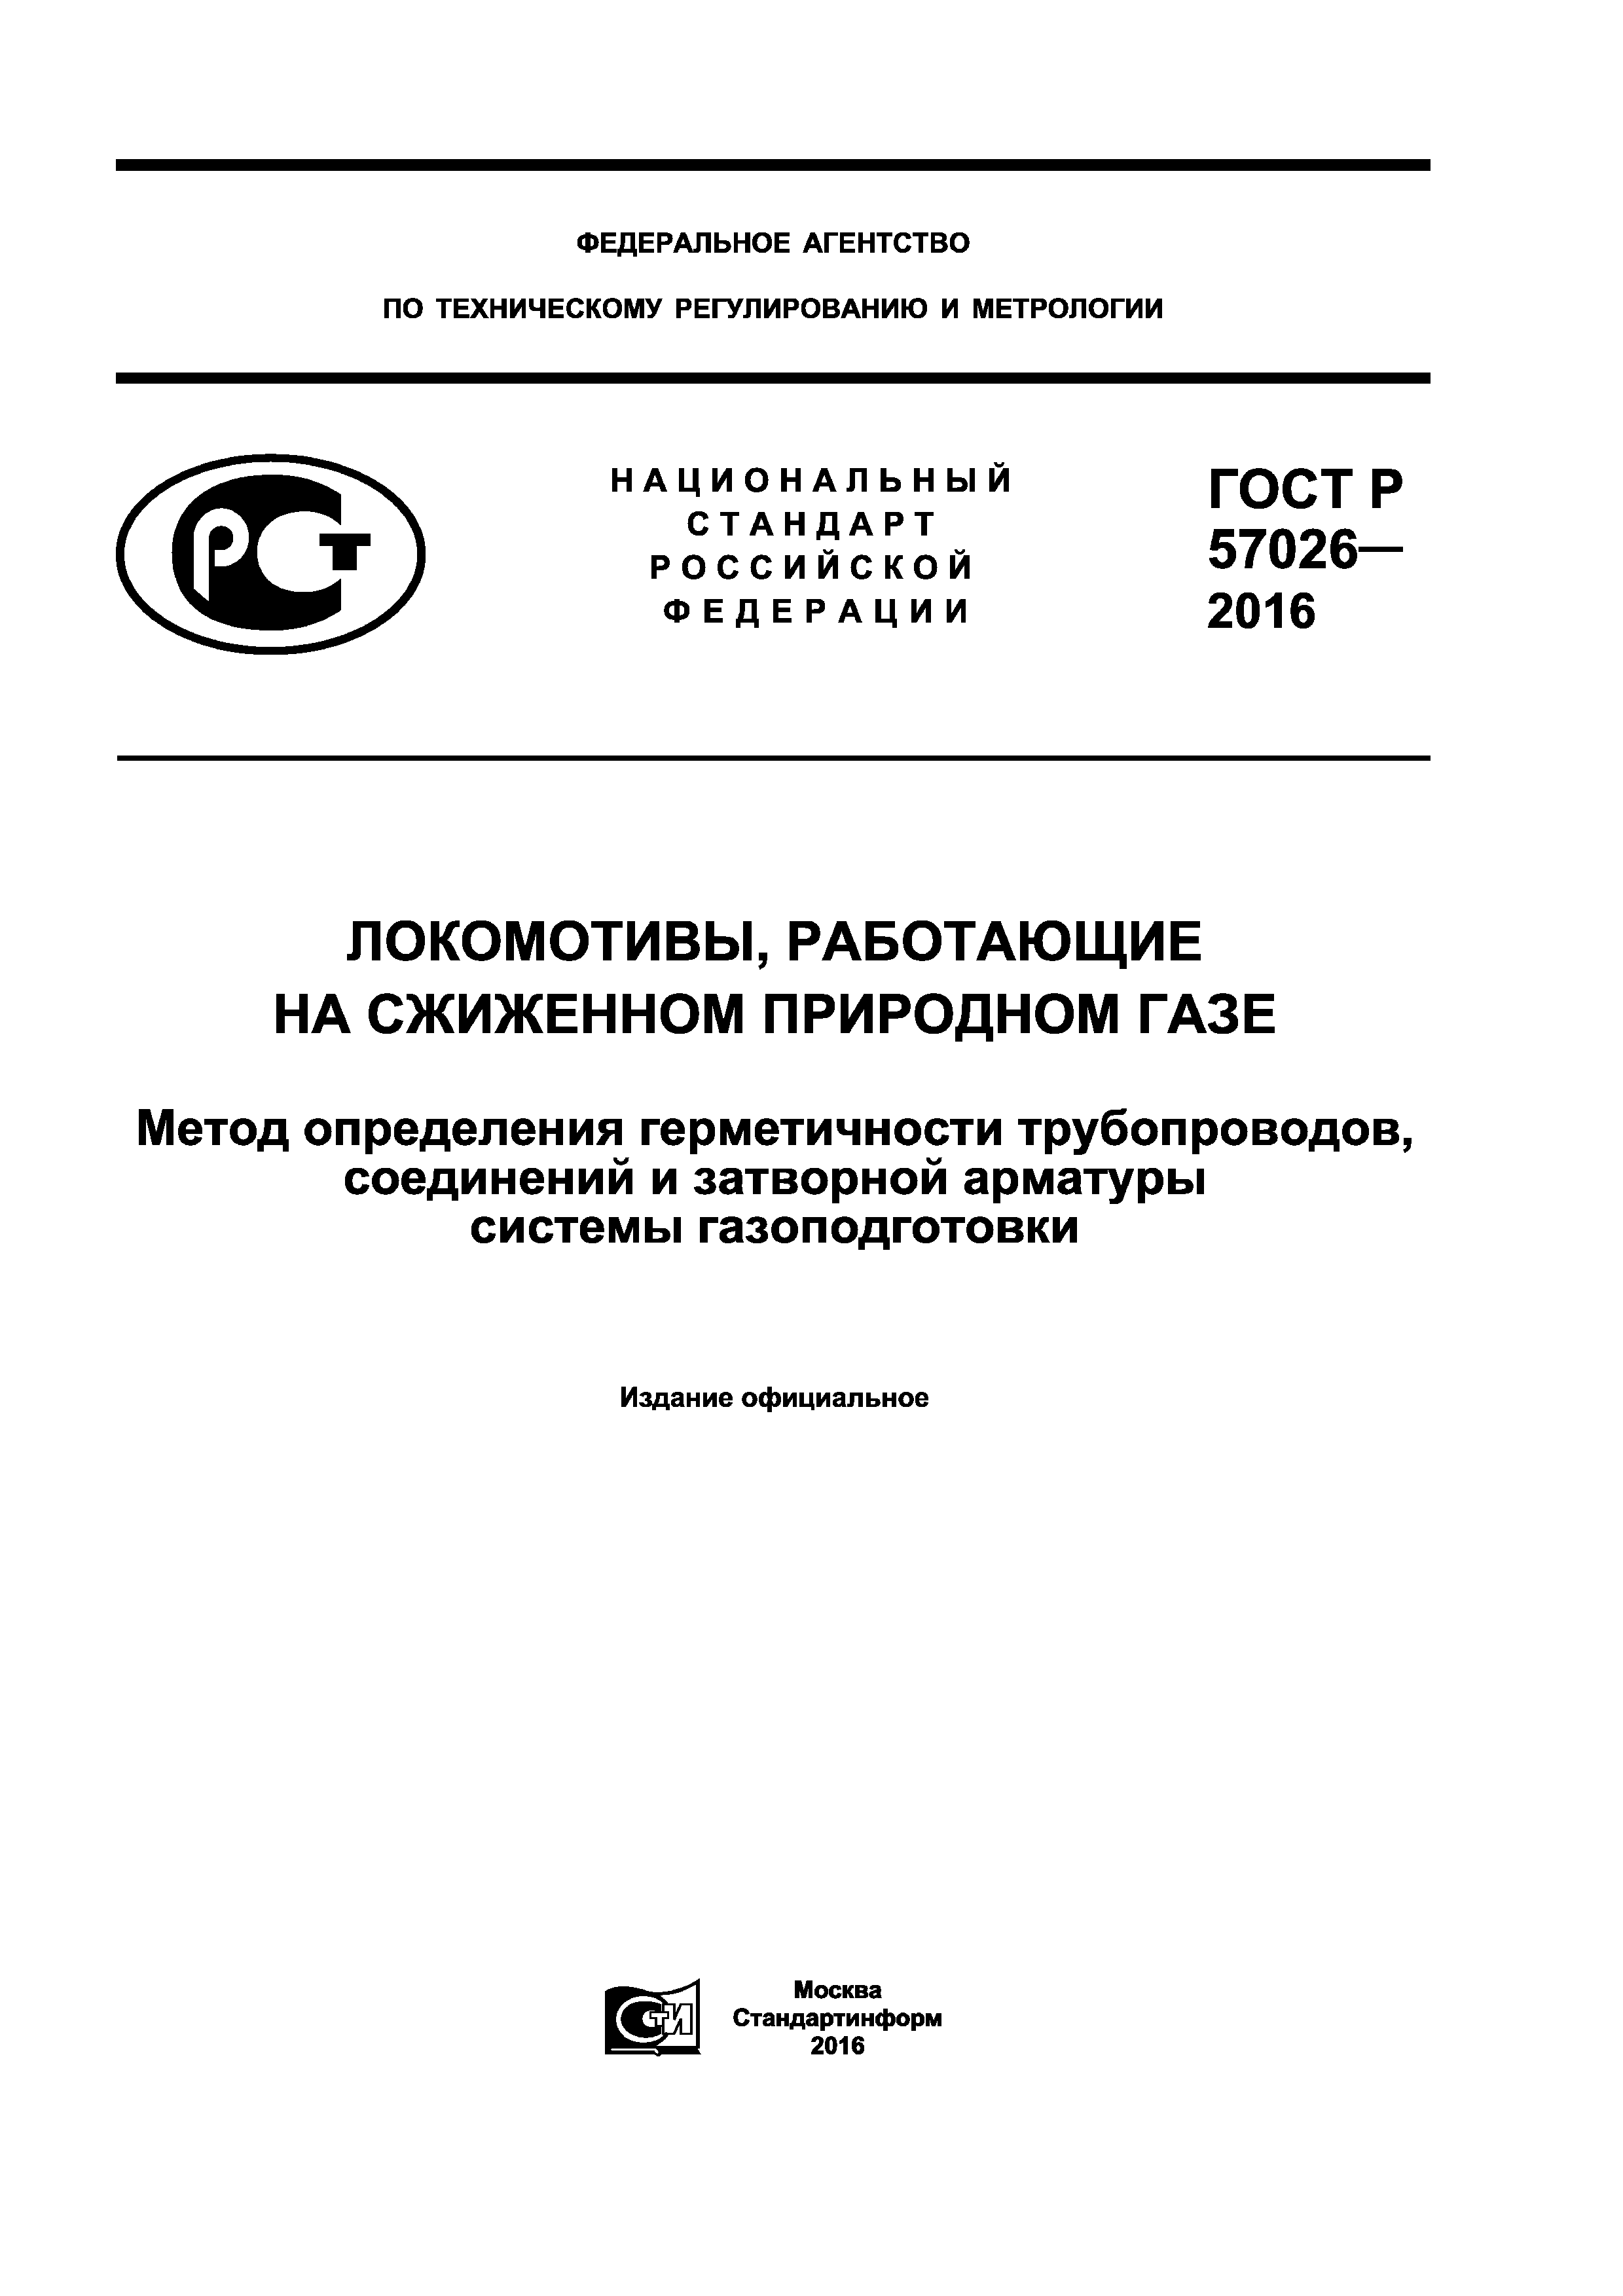 ГОСТ Р 57026-2016